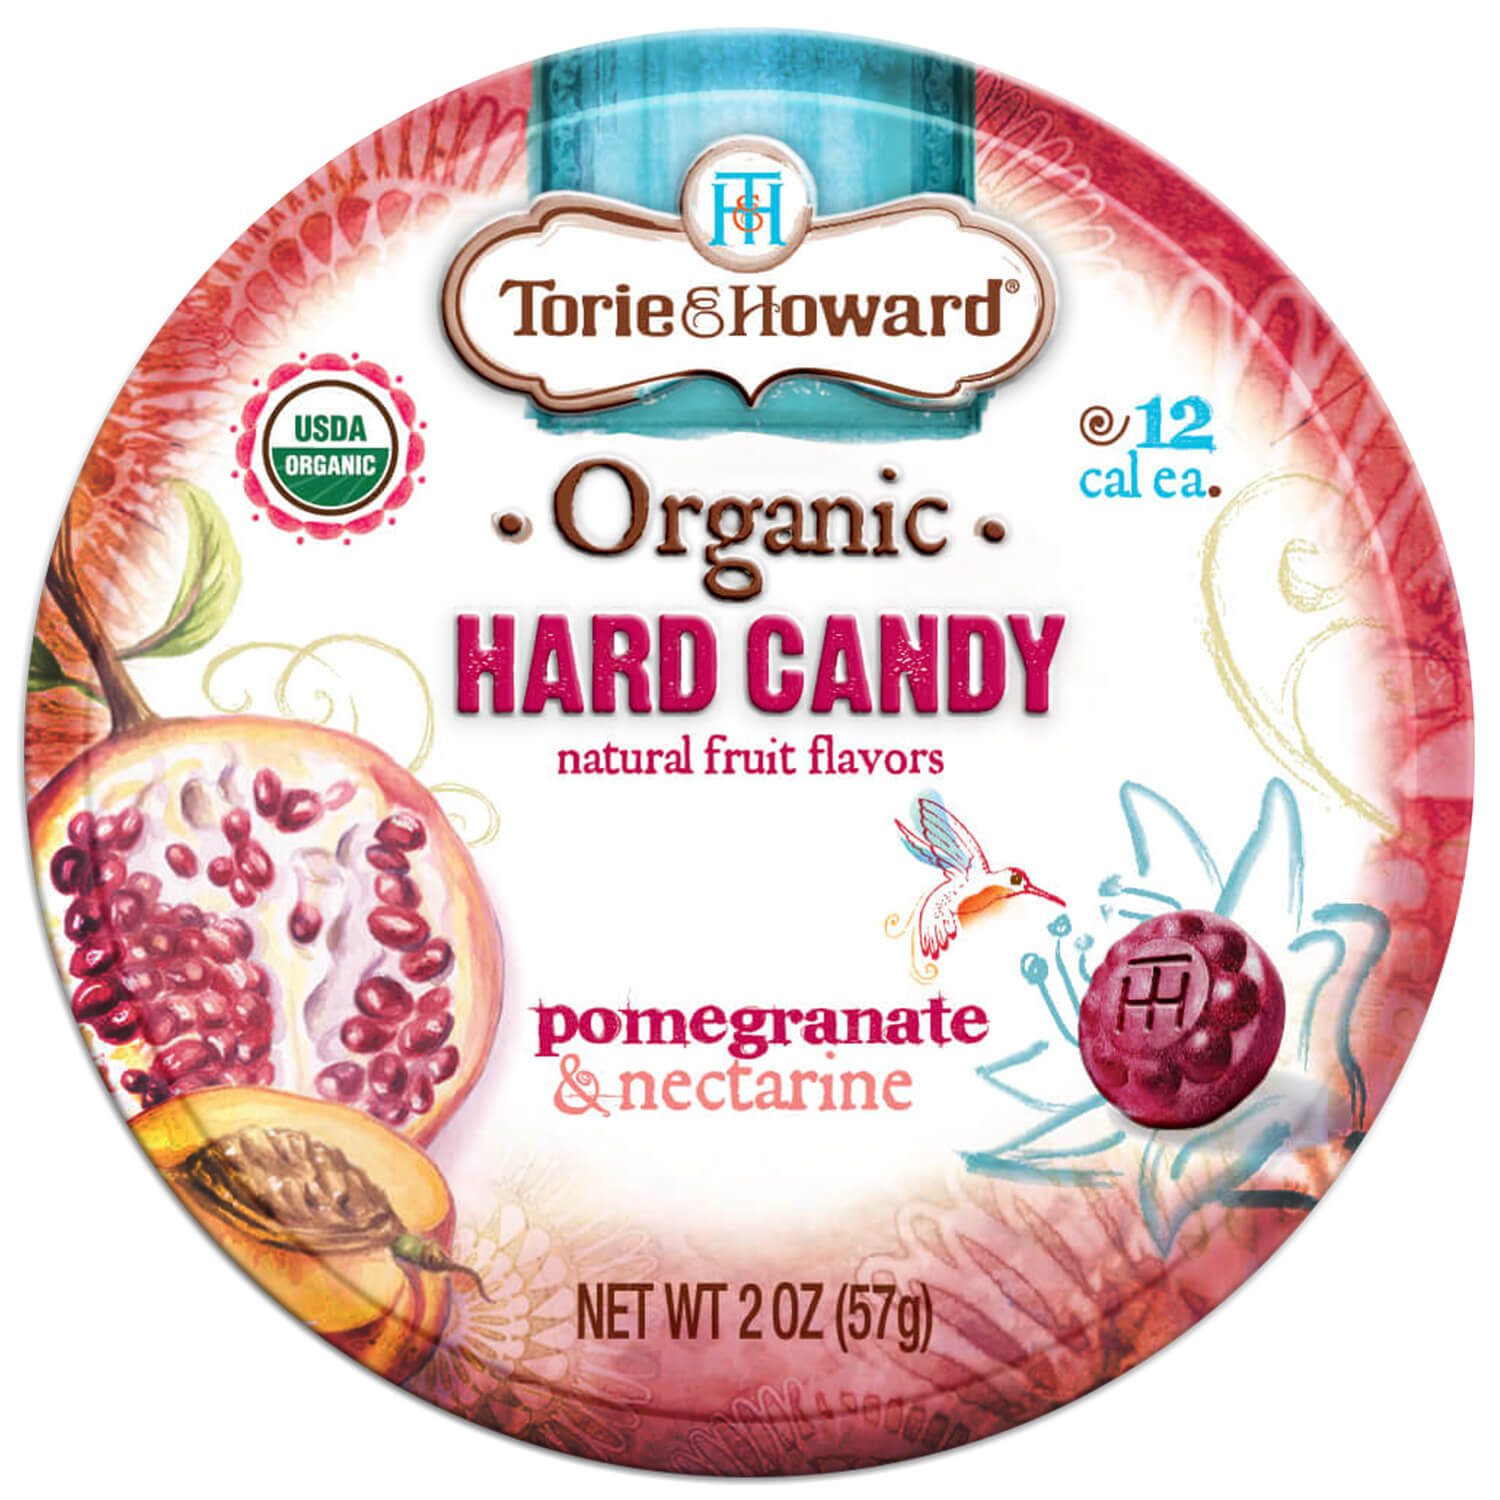 Torie & Howard Pomegranate & Nectarine Organic Hard Candy Tins 2oz Tins